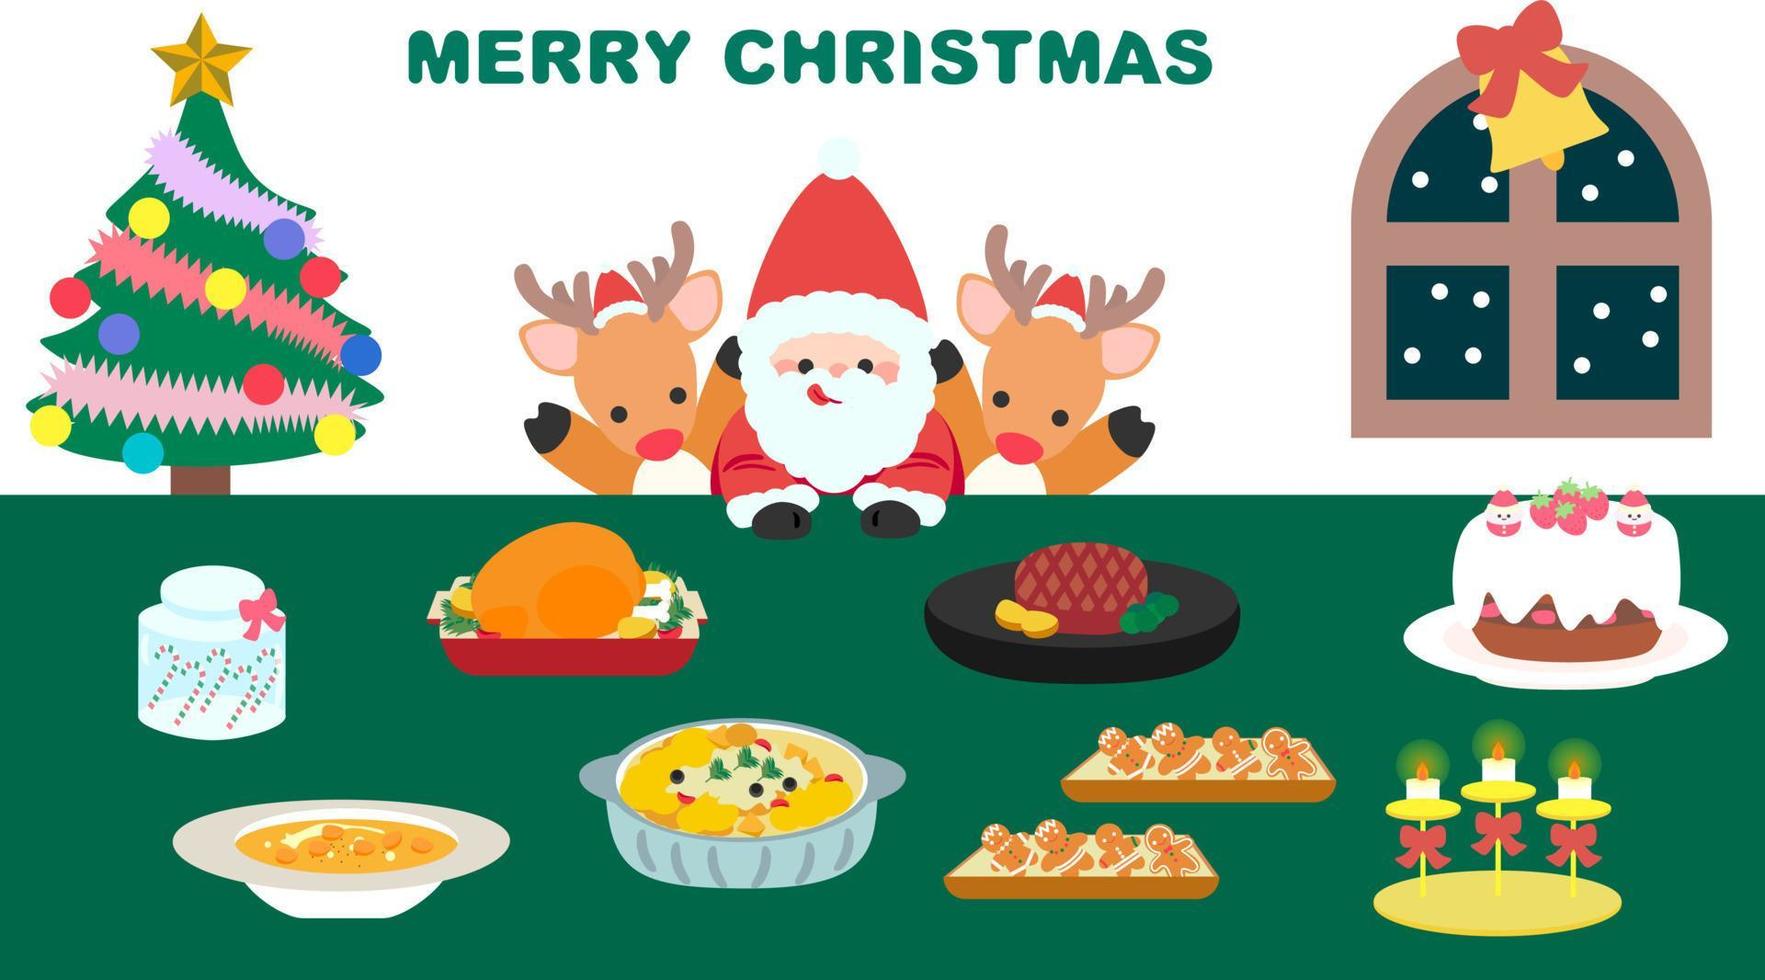 Cute Christmas dinner illustration. Santa Claus and reindeer enjoy festival dinner. Flat design, EPS10 Vector